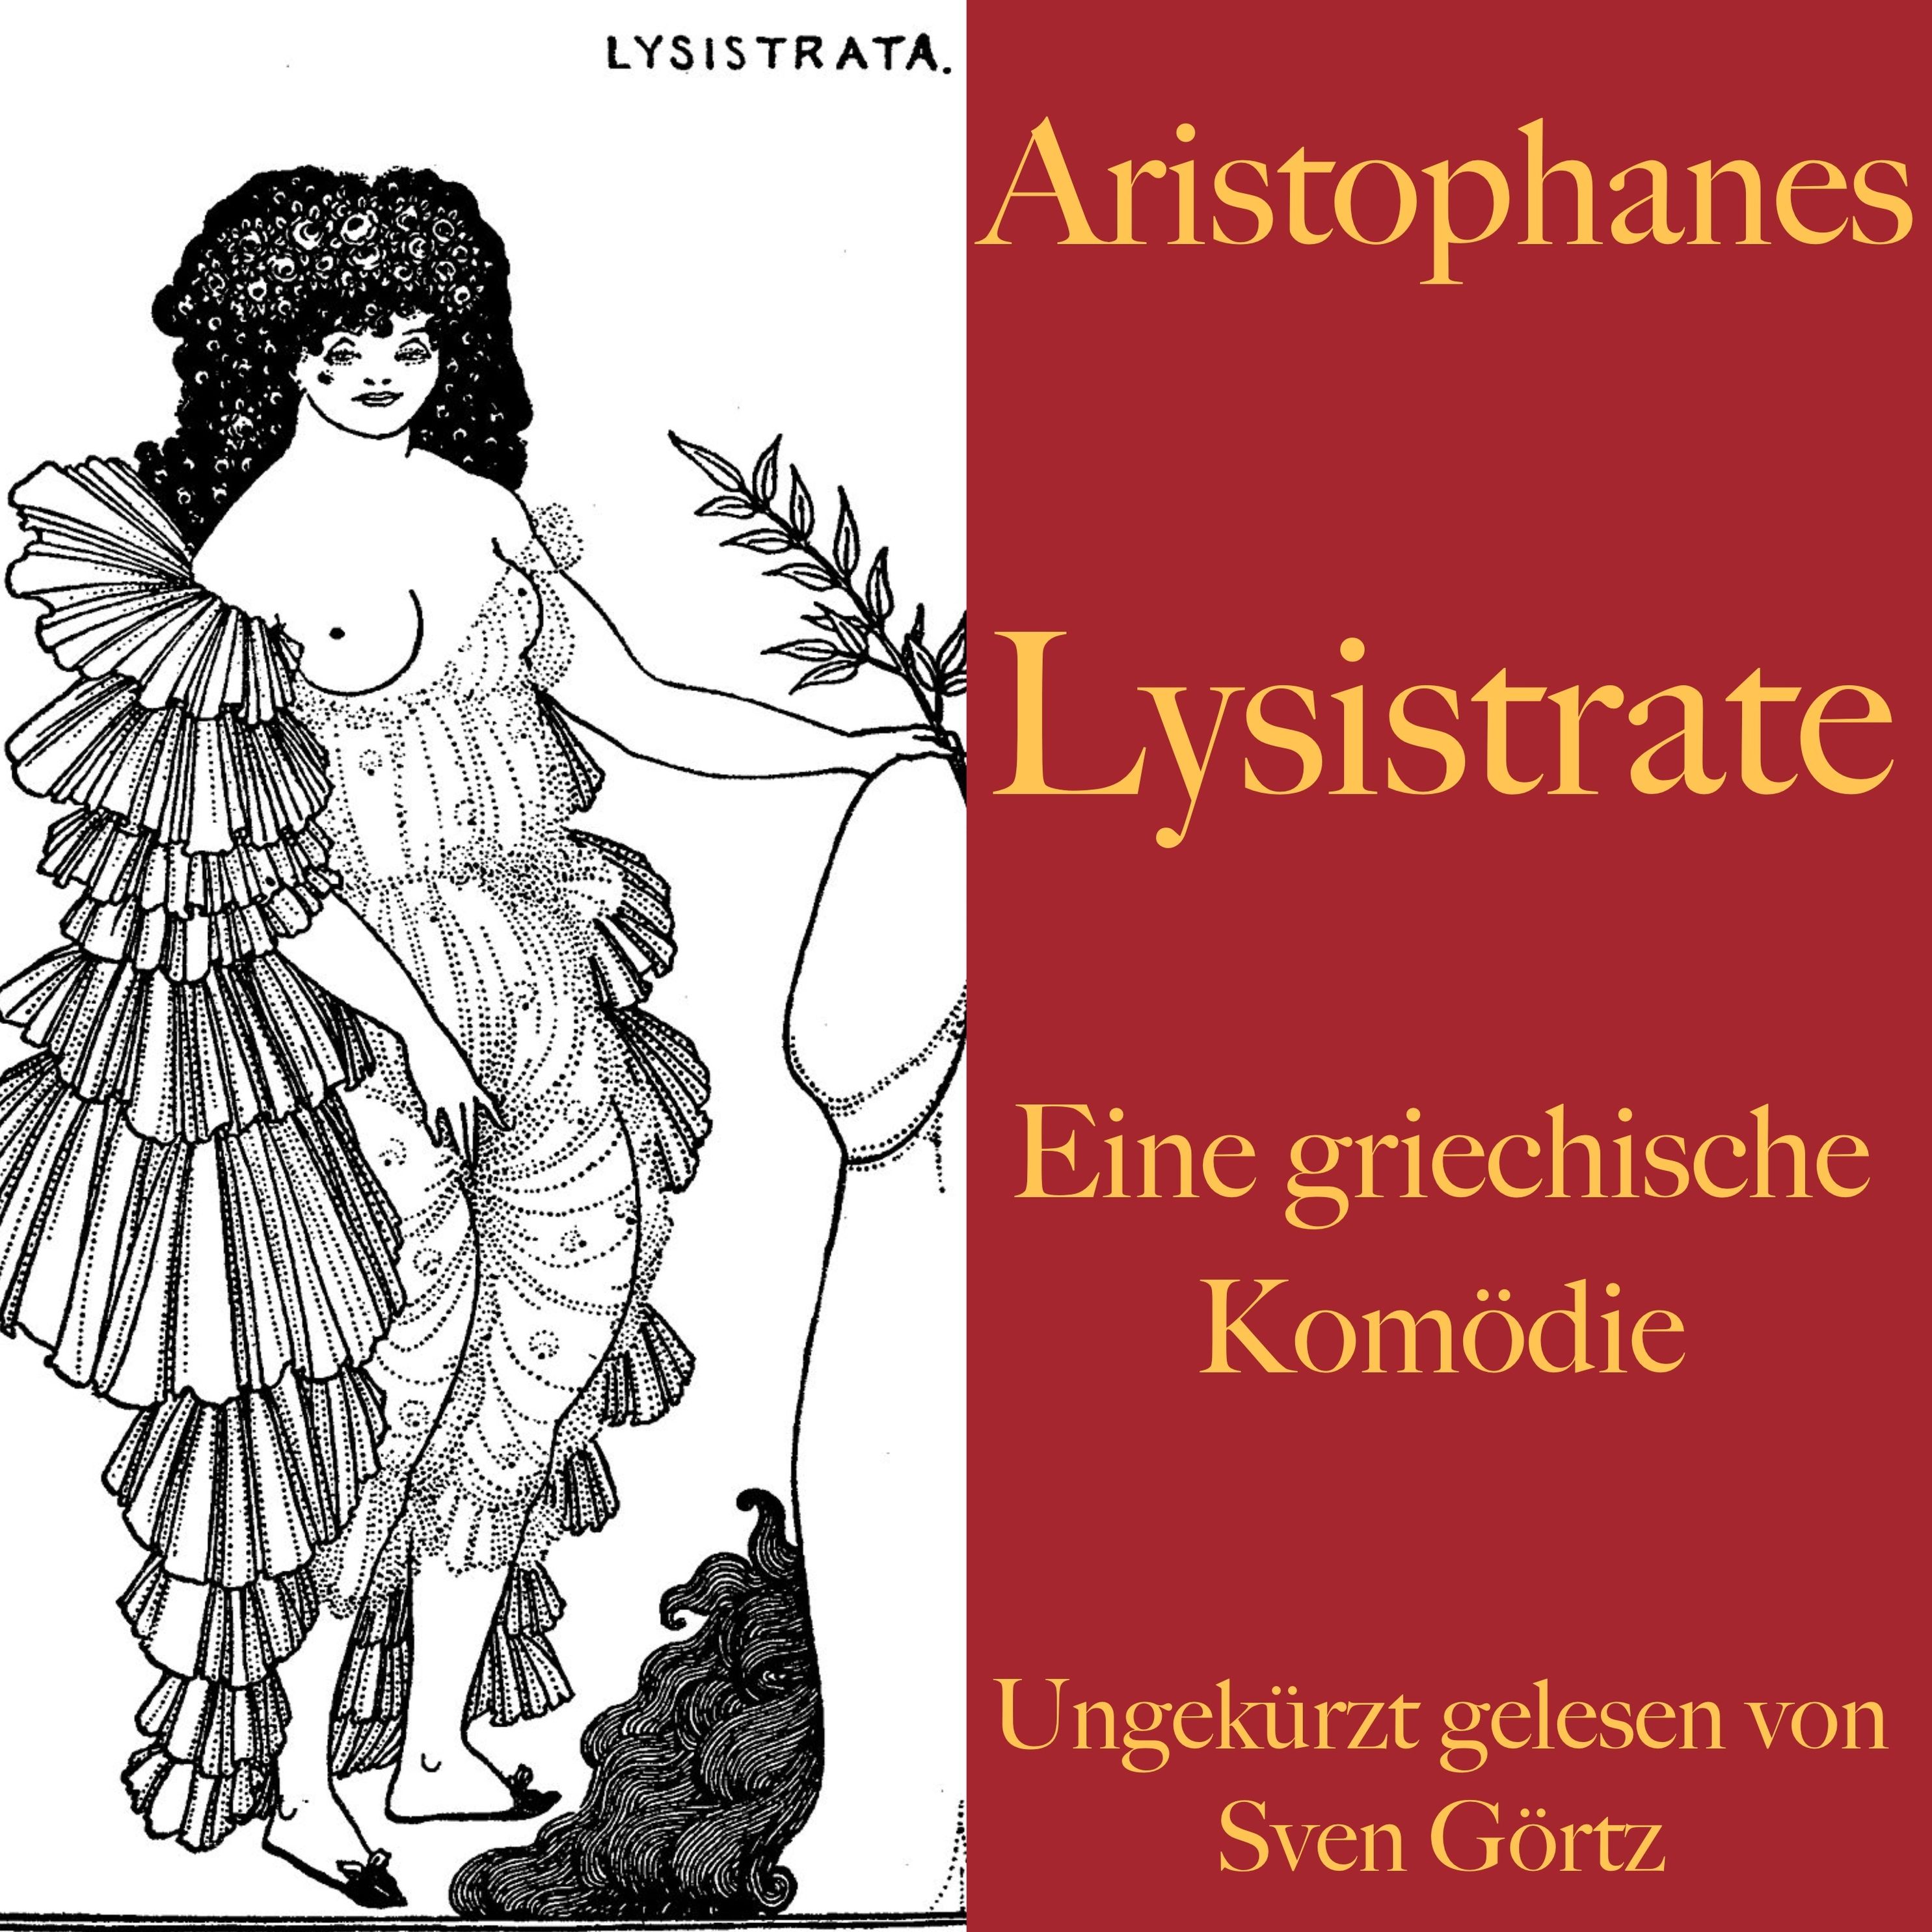 Aristophanes: Lysistrate Hörbuch downloaden bei Weltbild.de